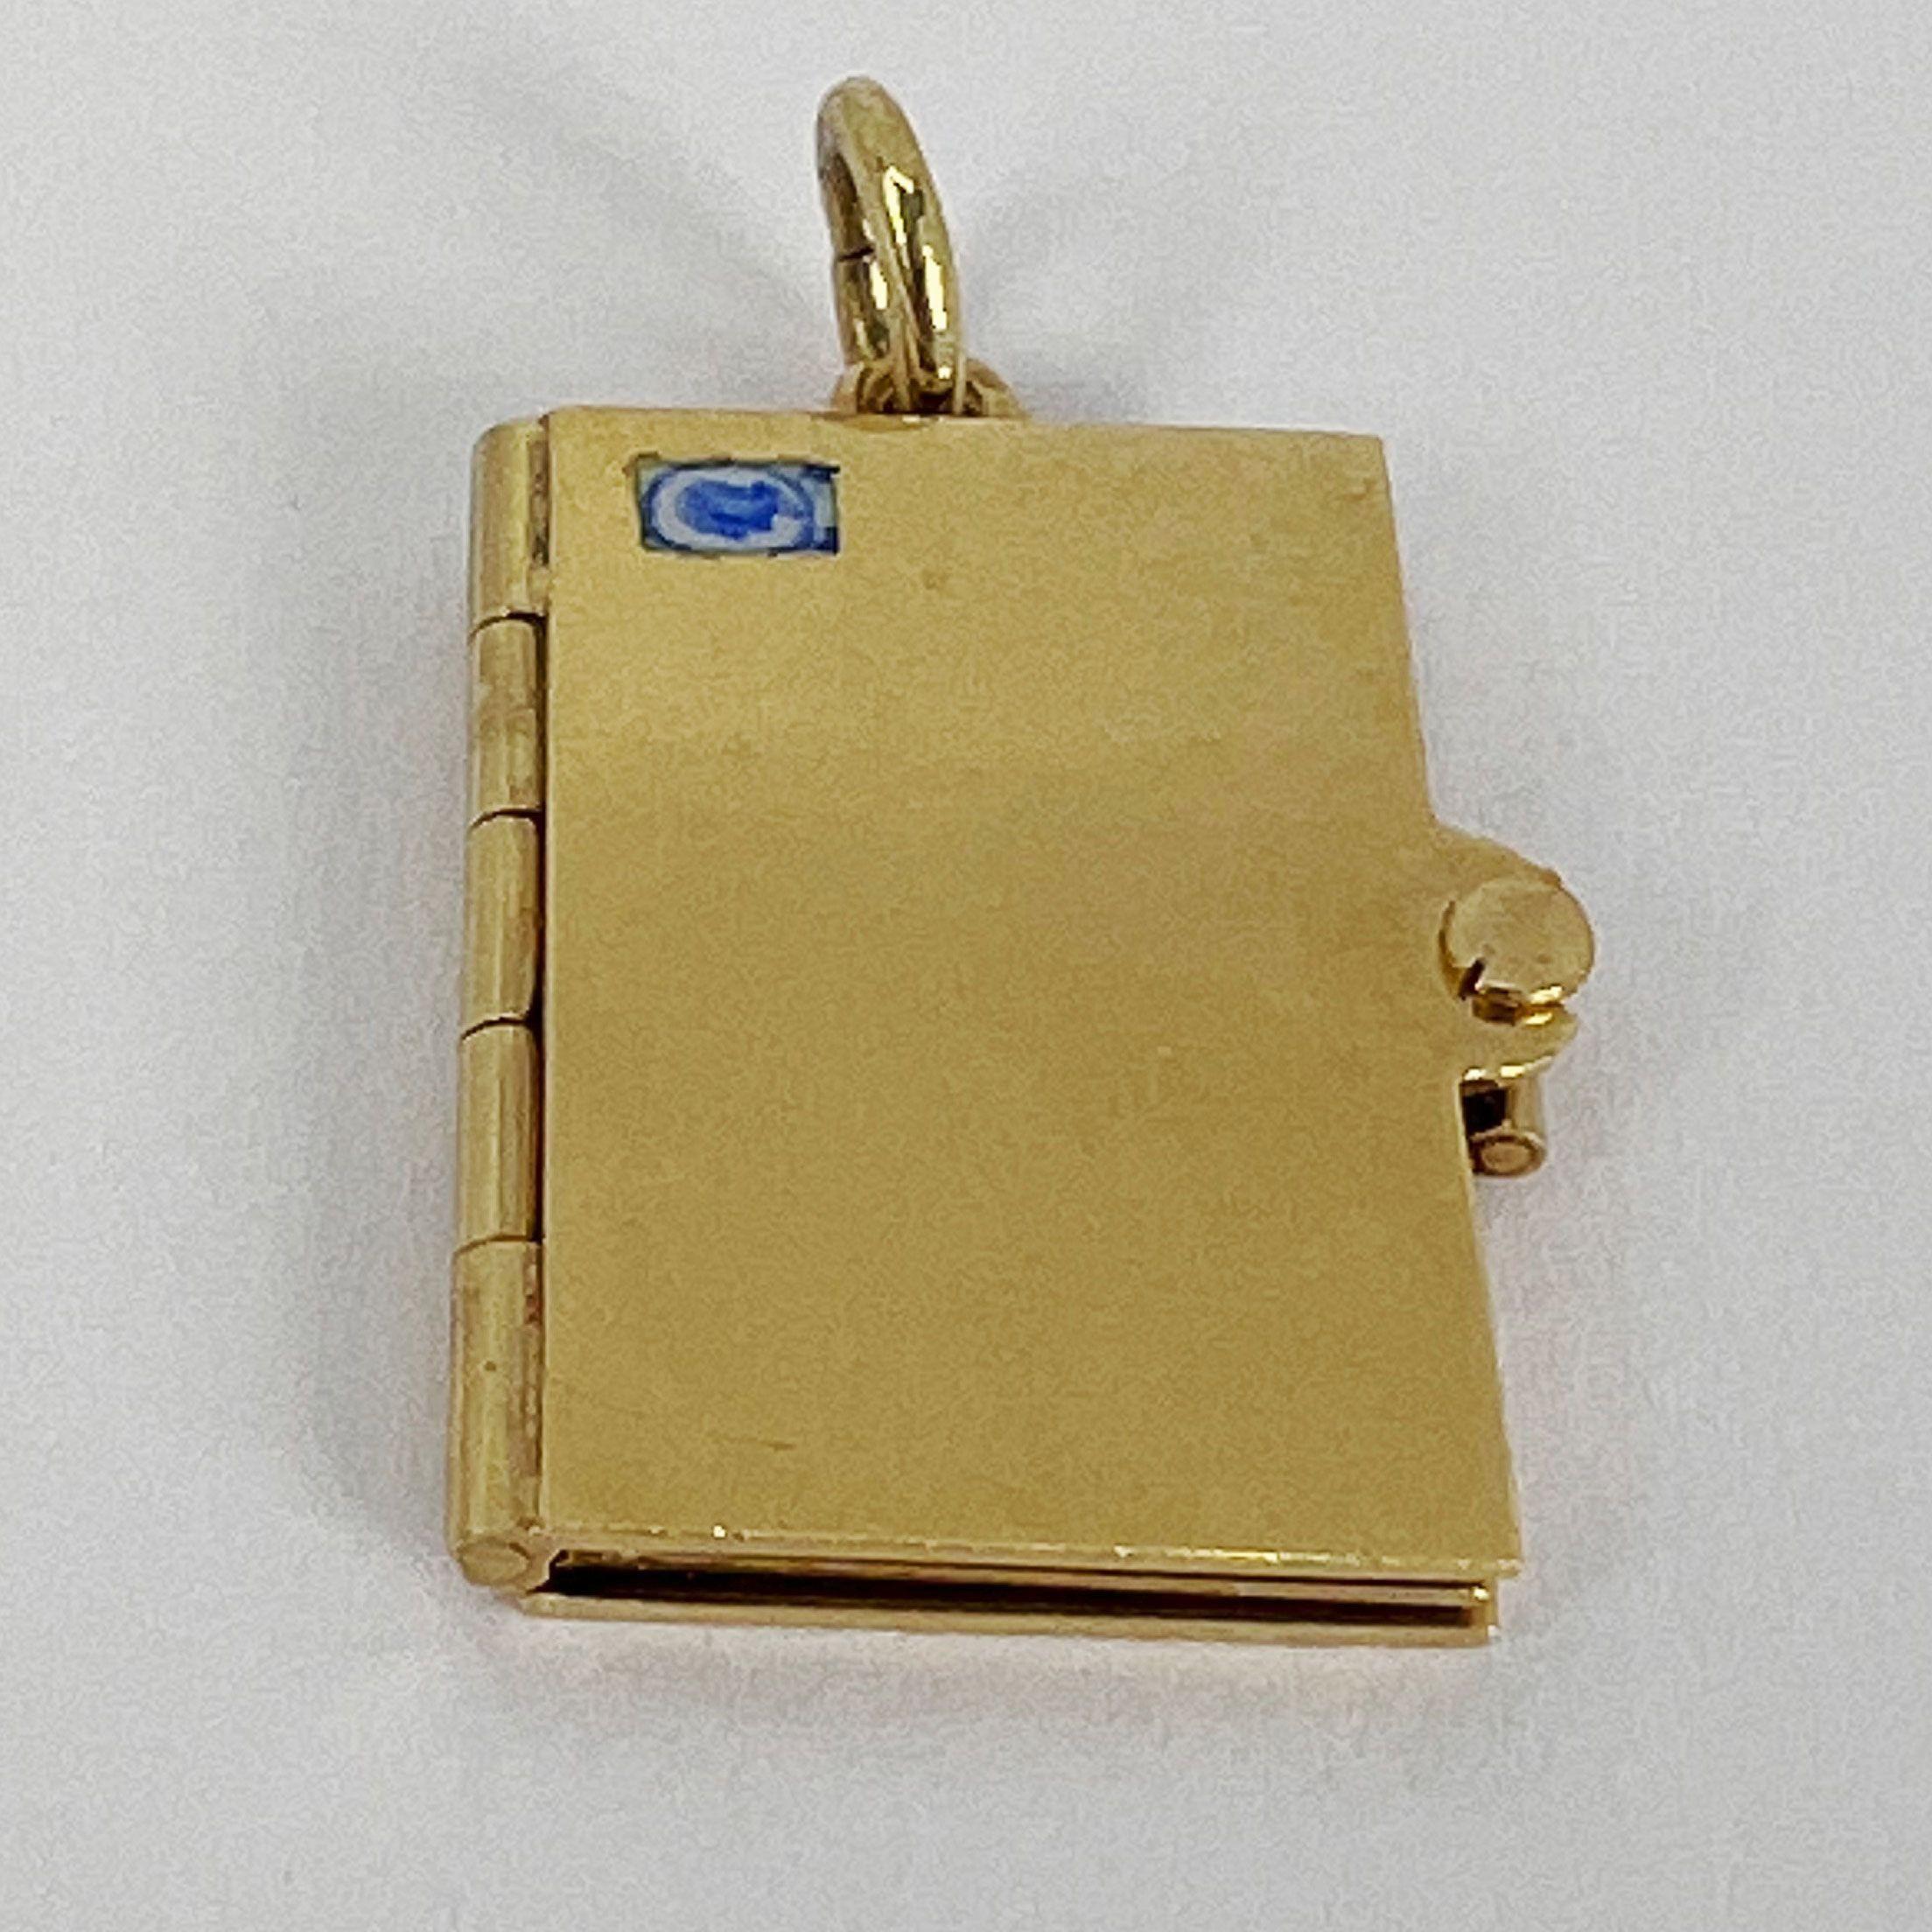 Envelope and Letter 14K Yellow Gold Enamel Stamp Charm Pendant 7